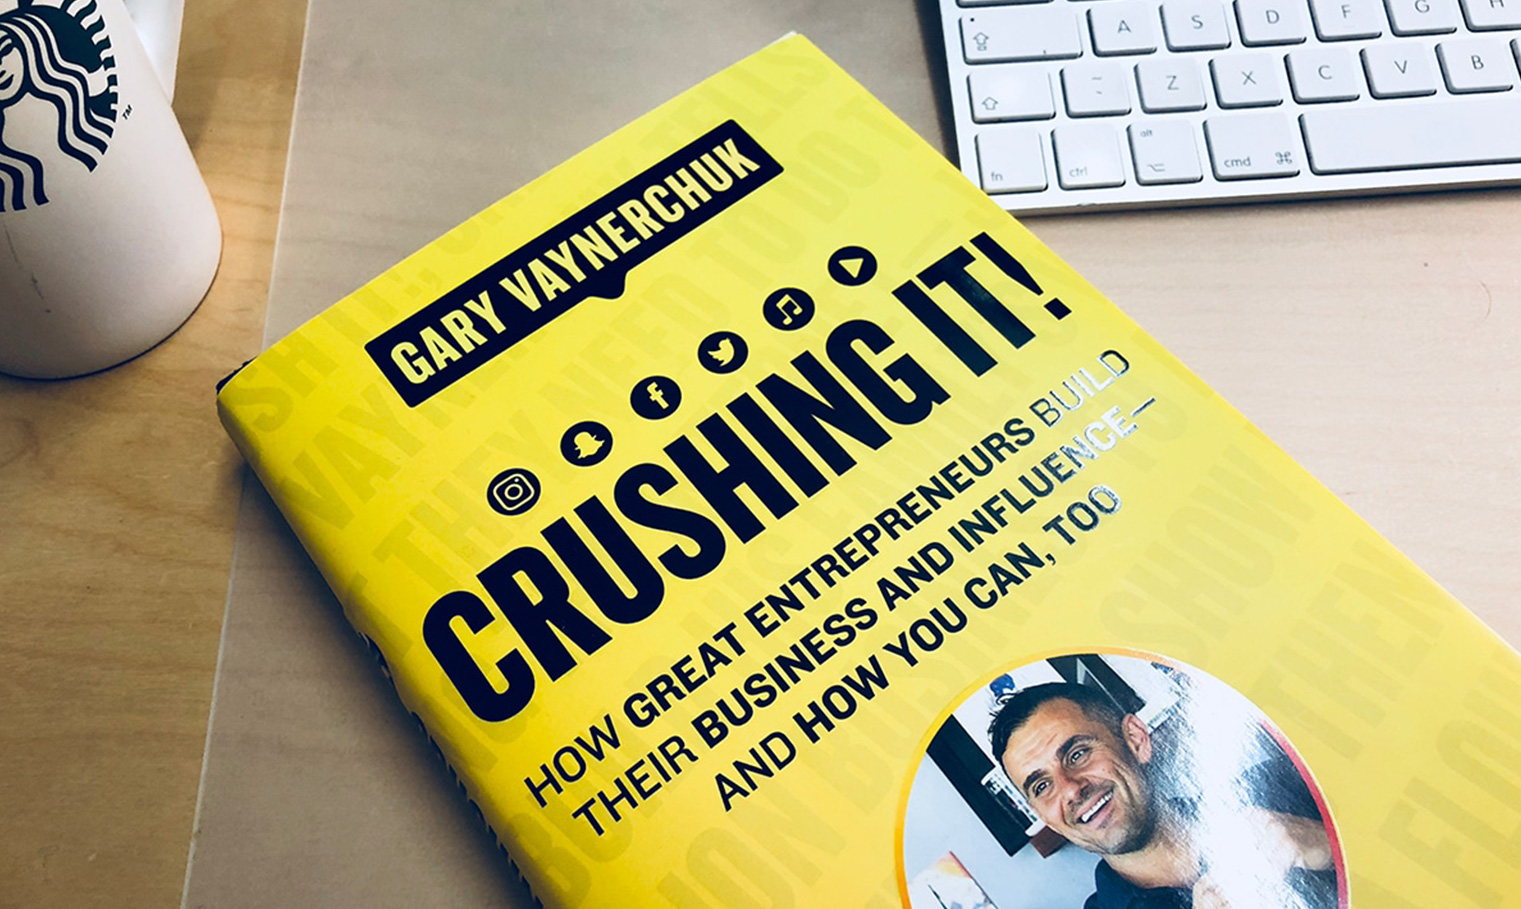 Featured in Gary Vaynerchuk’s ‘Crushing It’ Entrepreneurship Book